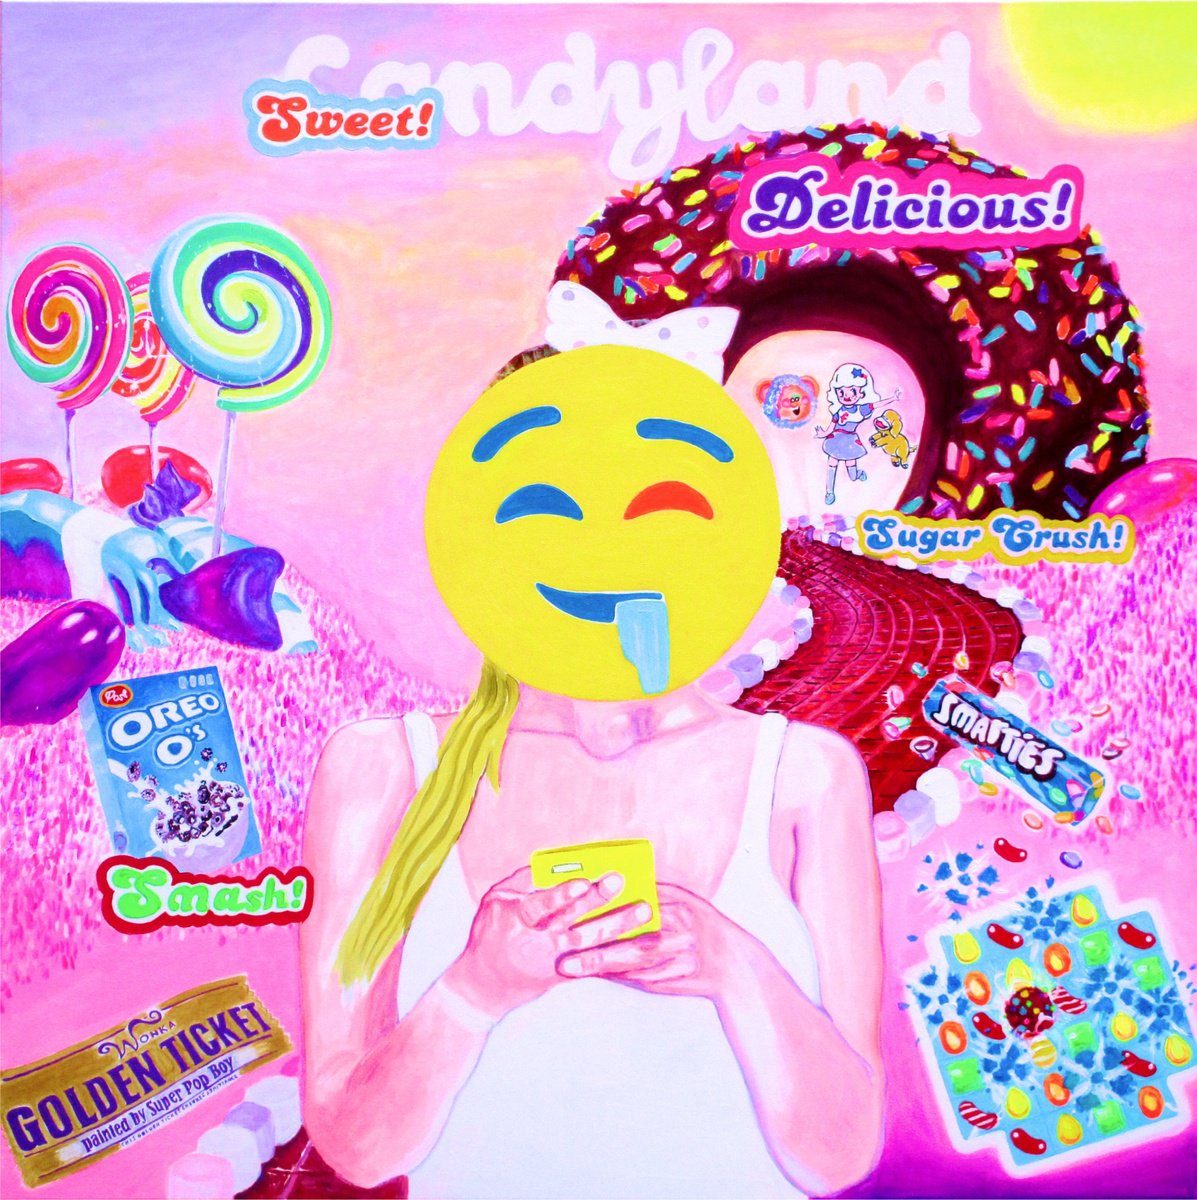 Candyland (Pop Art painting) by SUPER POP BOY - Pop Art